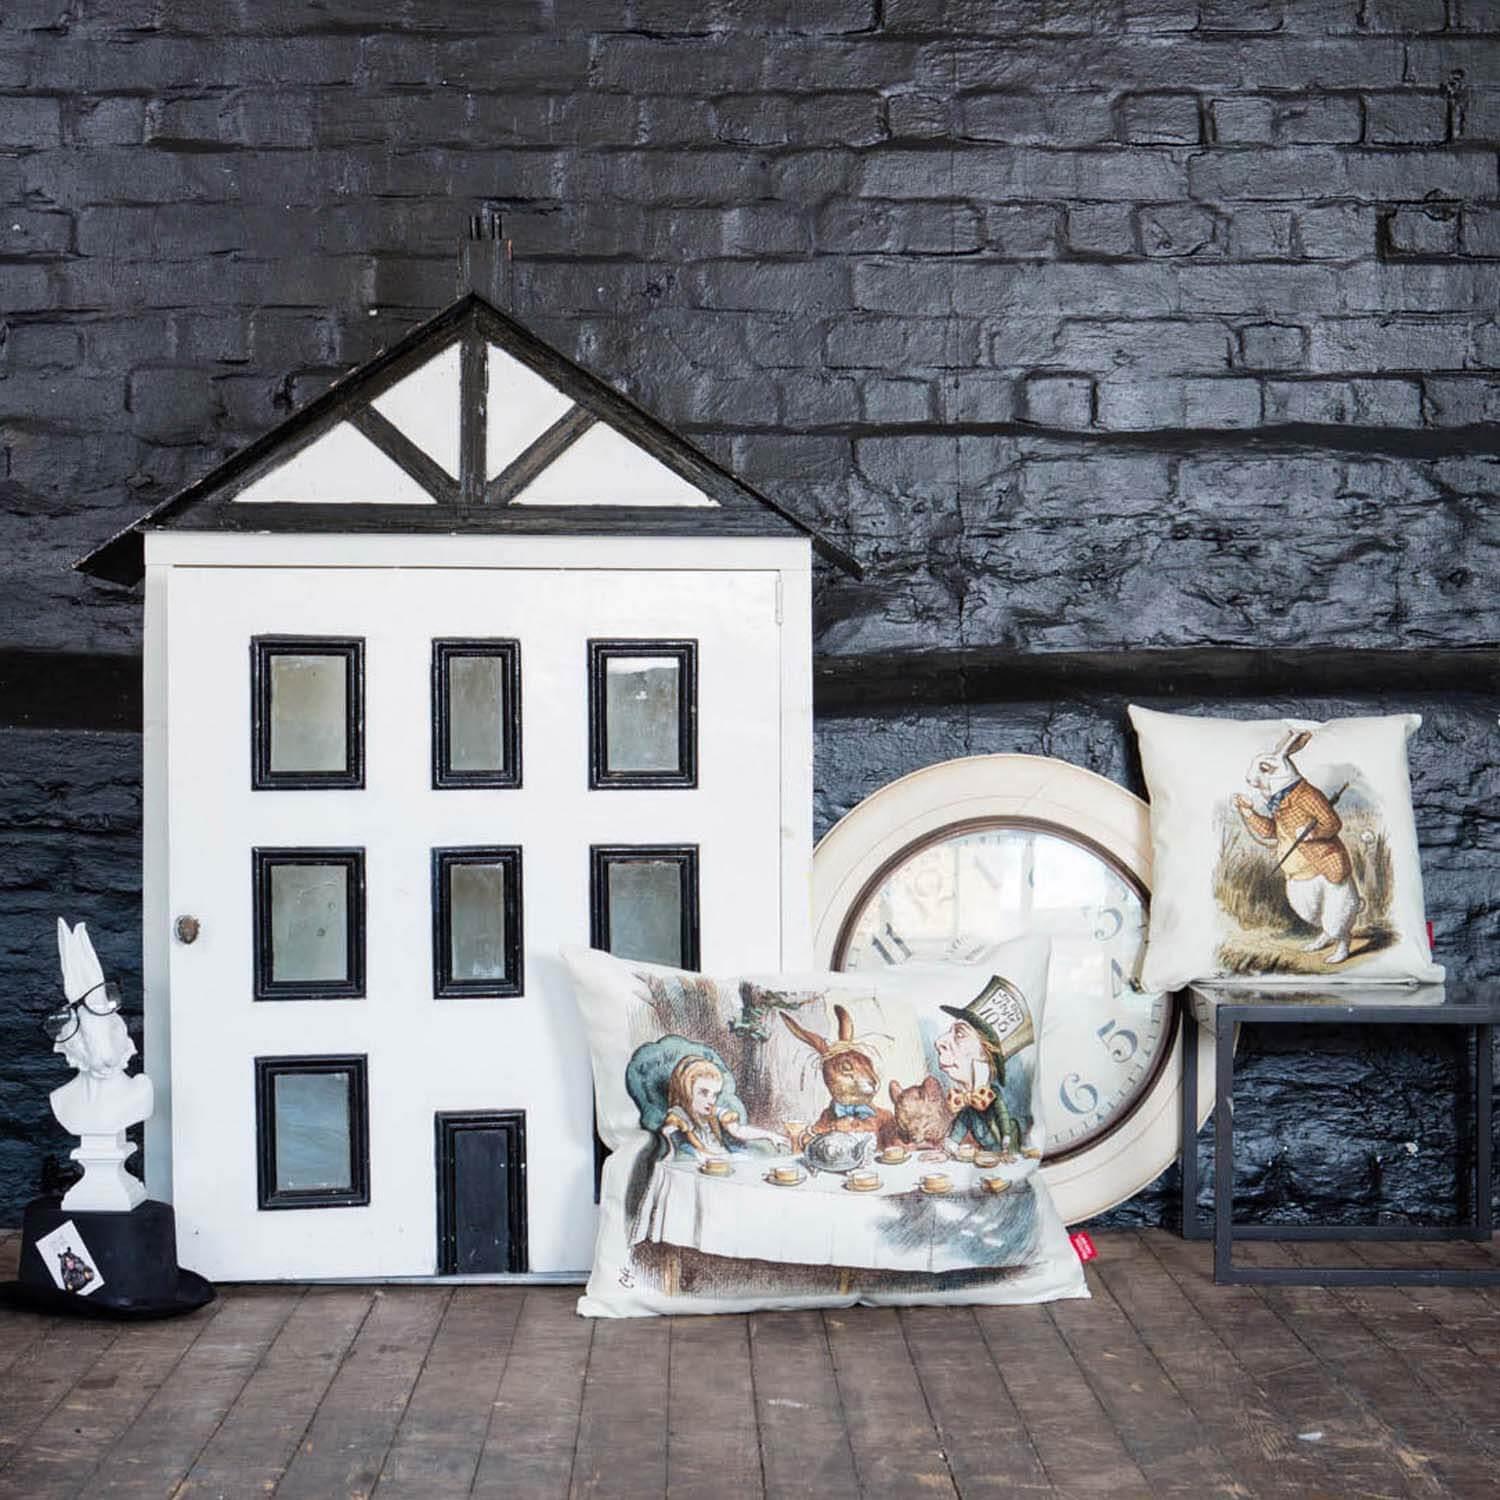 Drink Me - Alice in Wonderland - Lewis Carroll Cushion - Handmade Cushions UK - WeLoveCushions